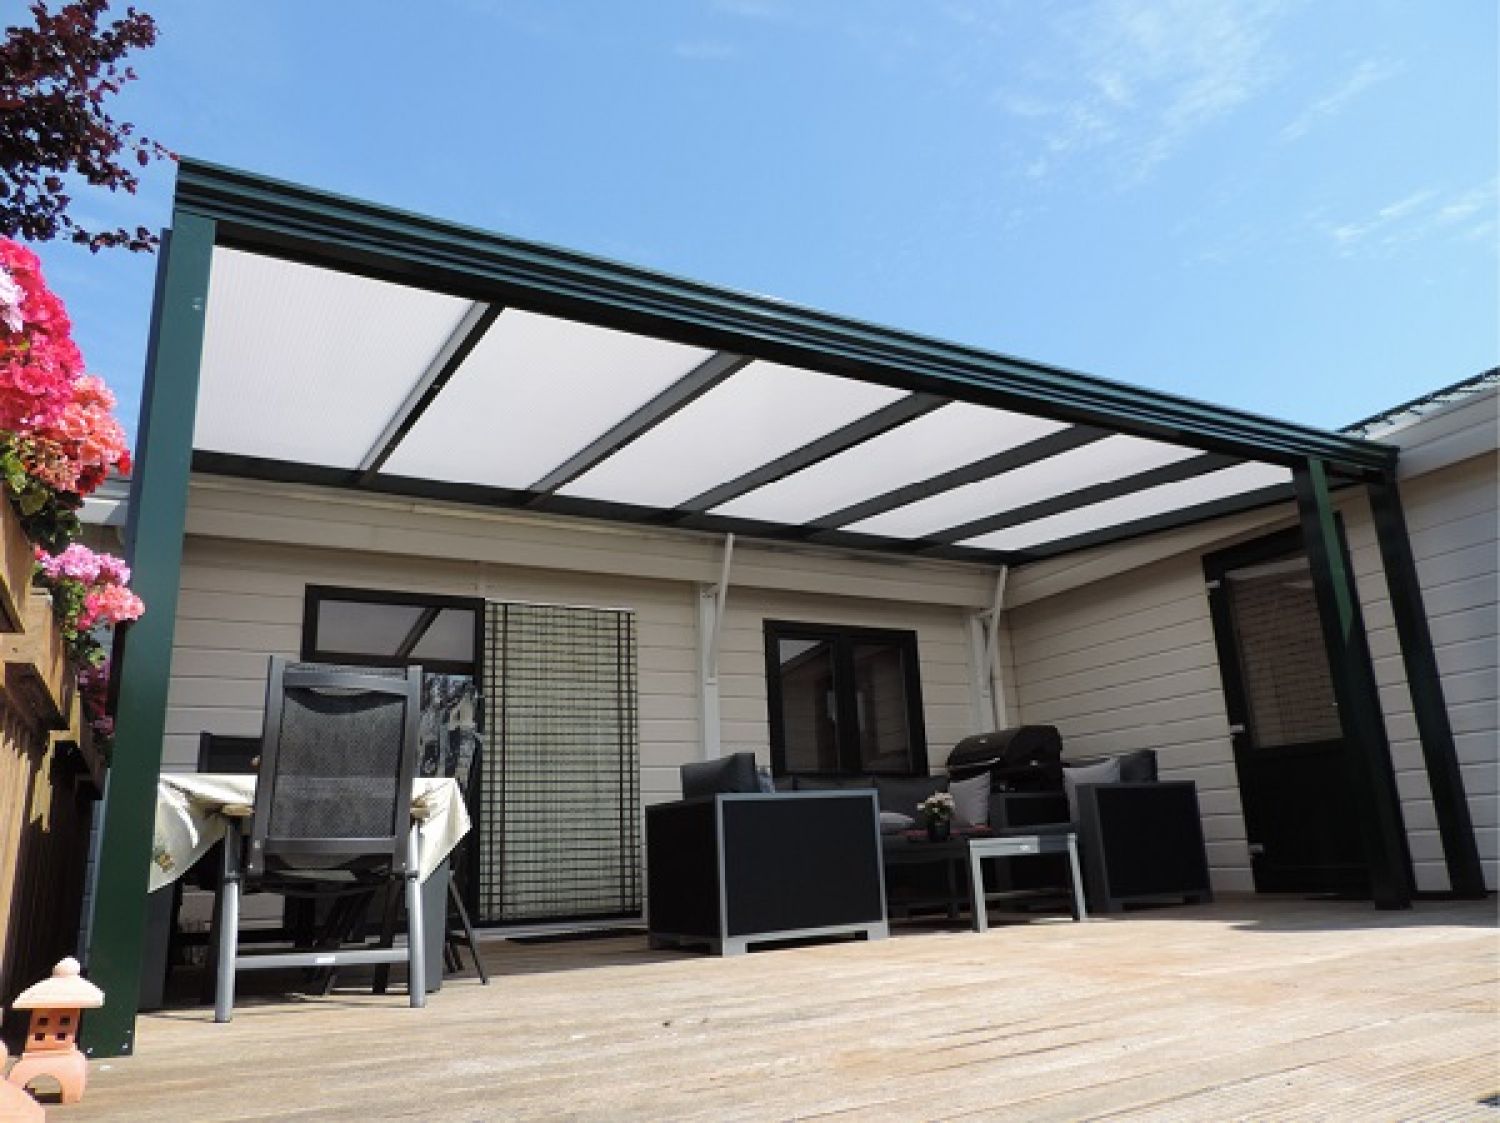 Profiline veranda 400x250 cm - polycarbonaat dak